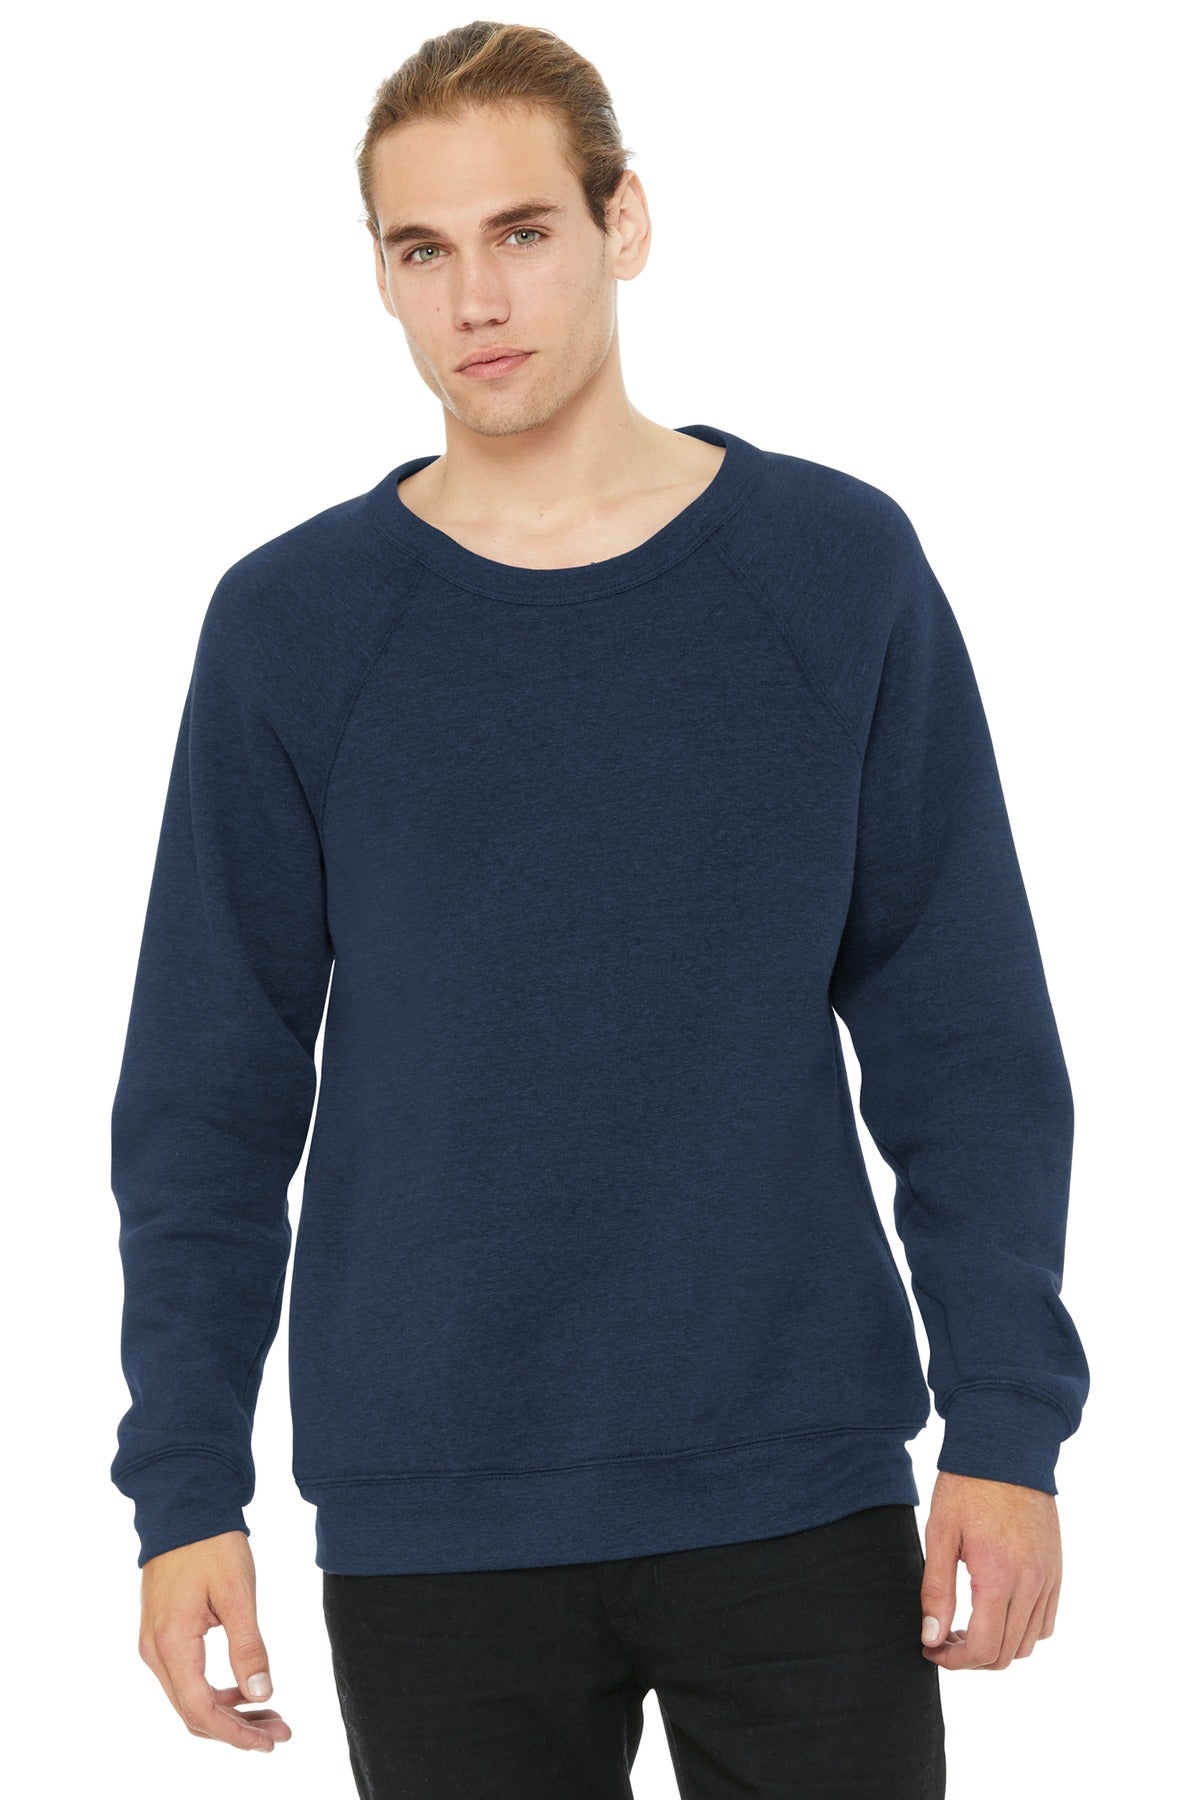 BELLA+CANVAS ® Unisex Sponge Fleece Raglan Sweatshirt. BC3901 - DFW Impression